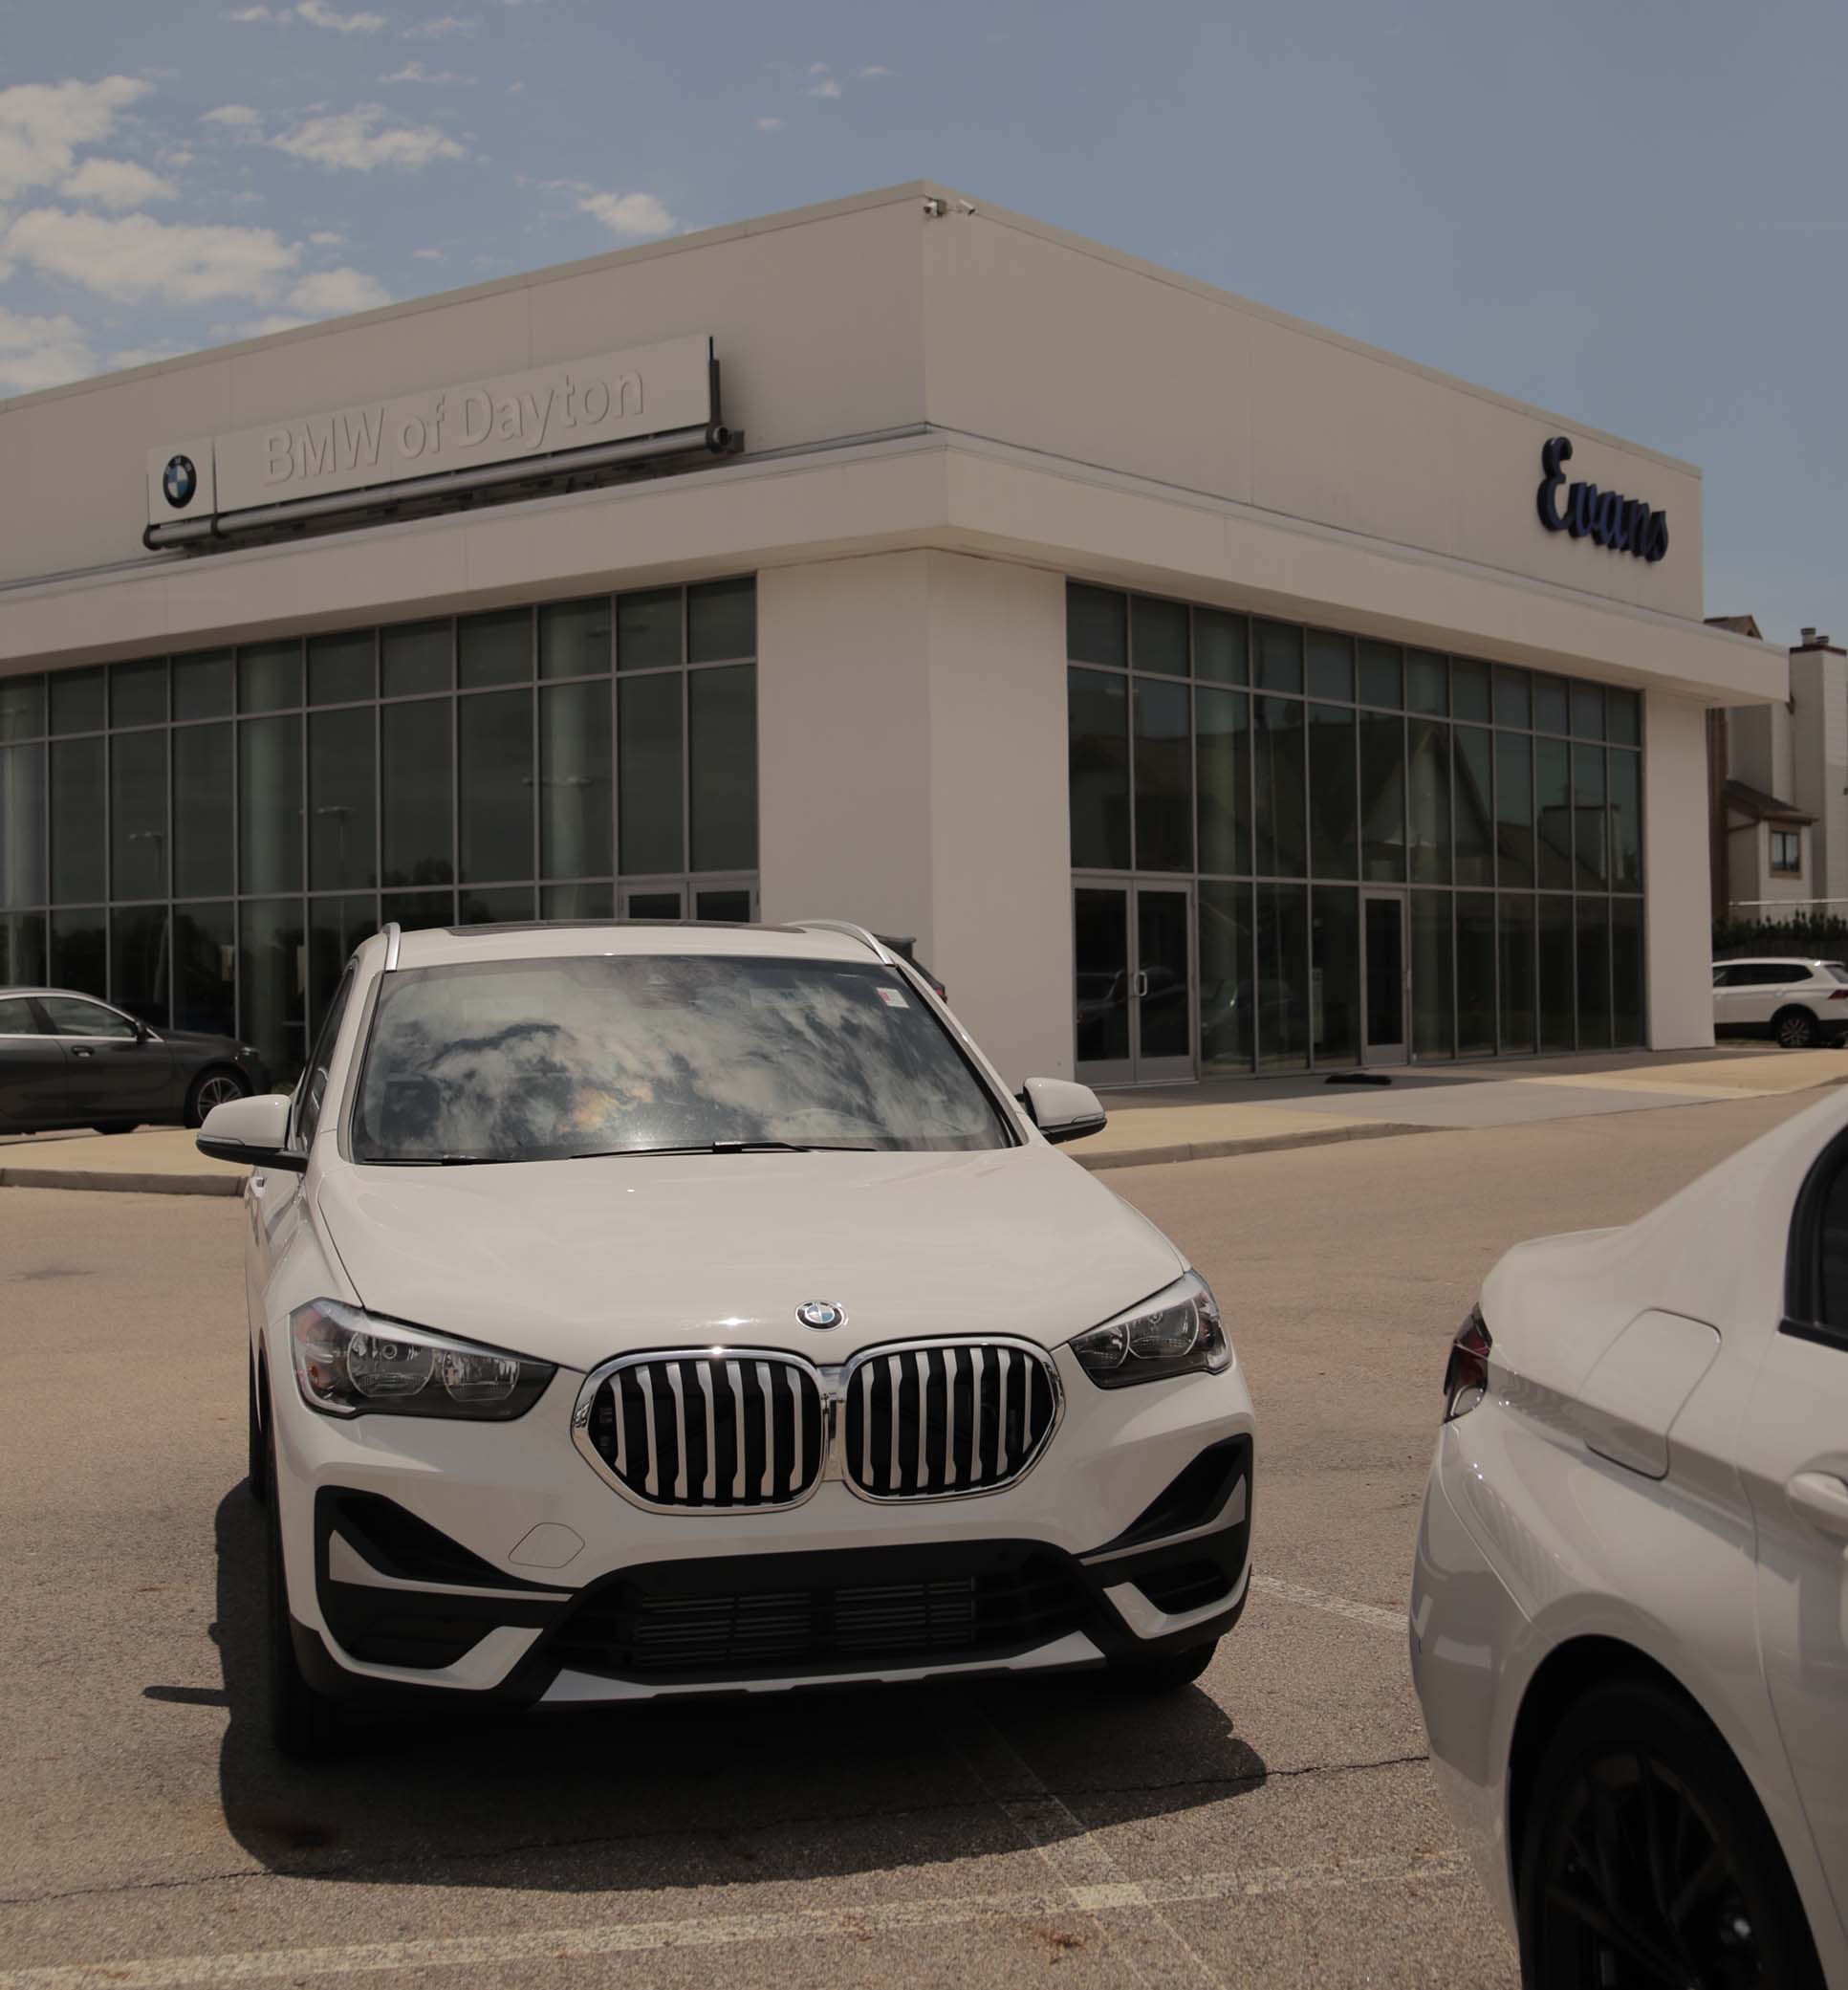 New BMW vehicle in Dayton, OH